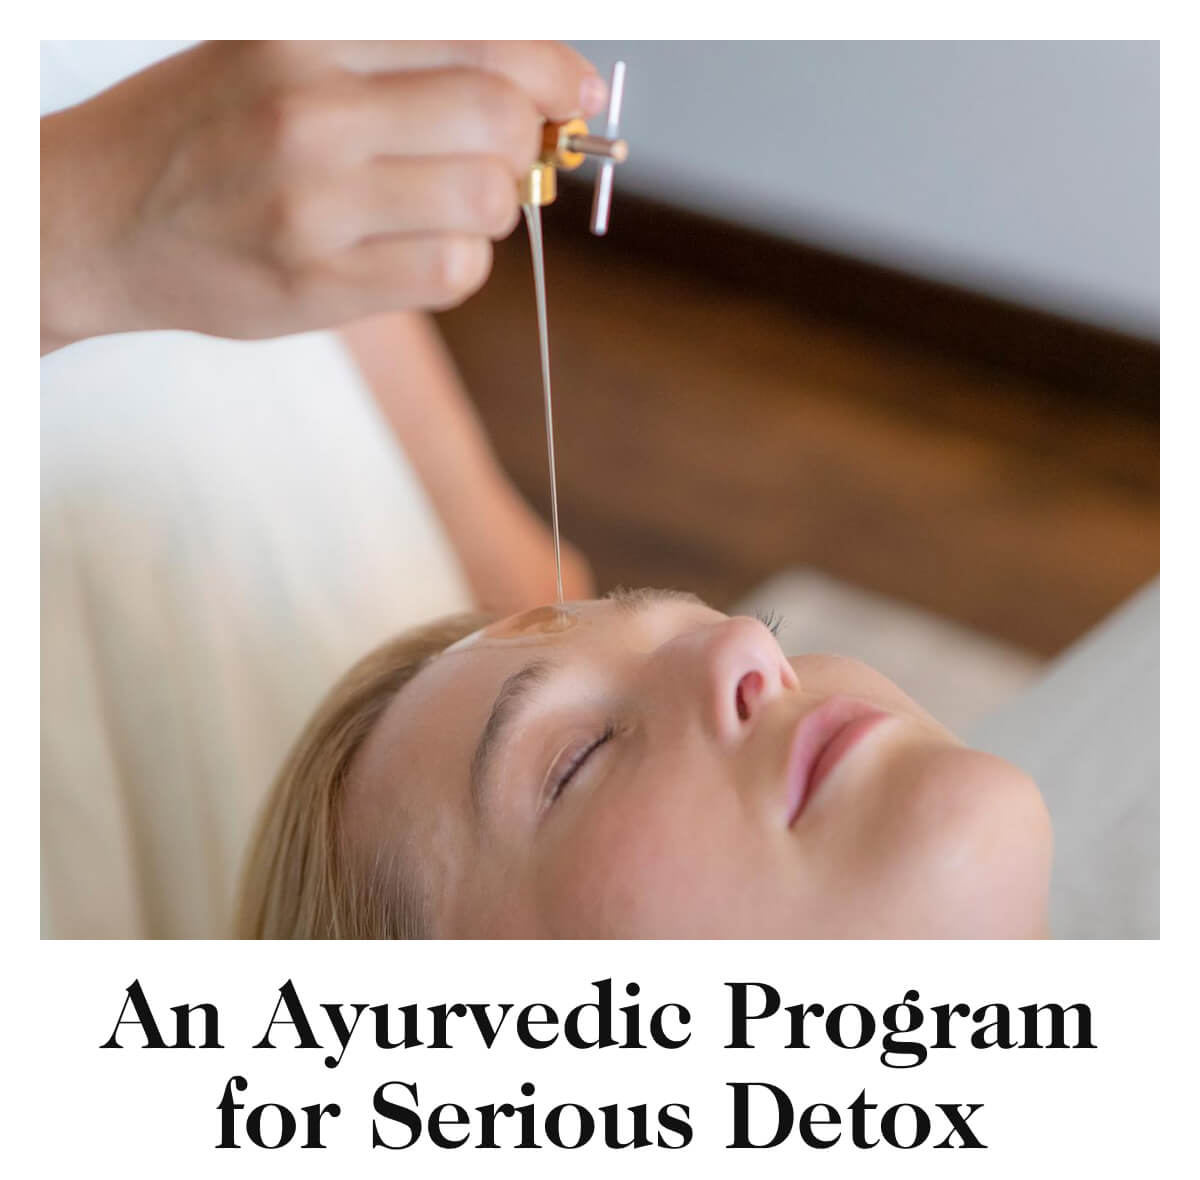 An Ayurvedic Program for Serious Detox